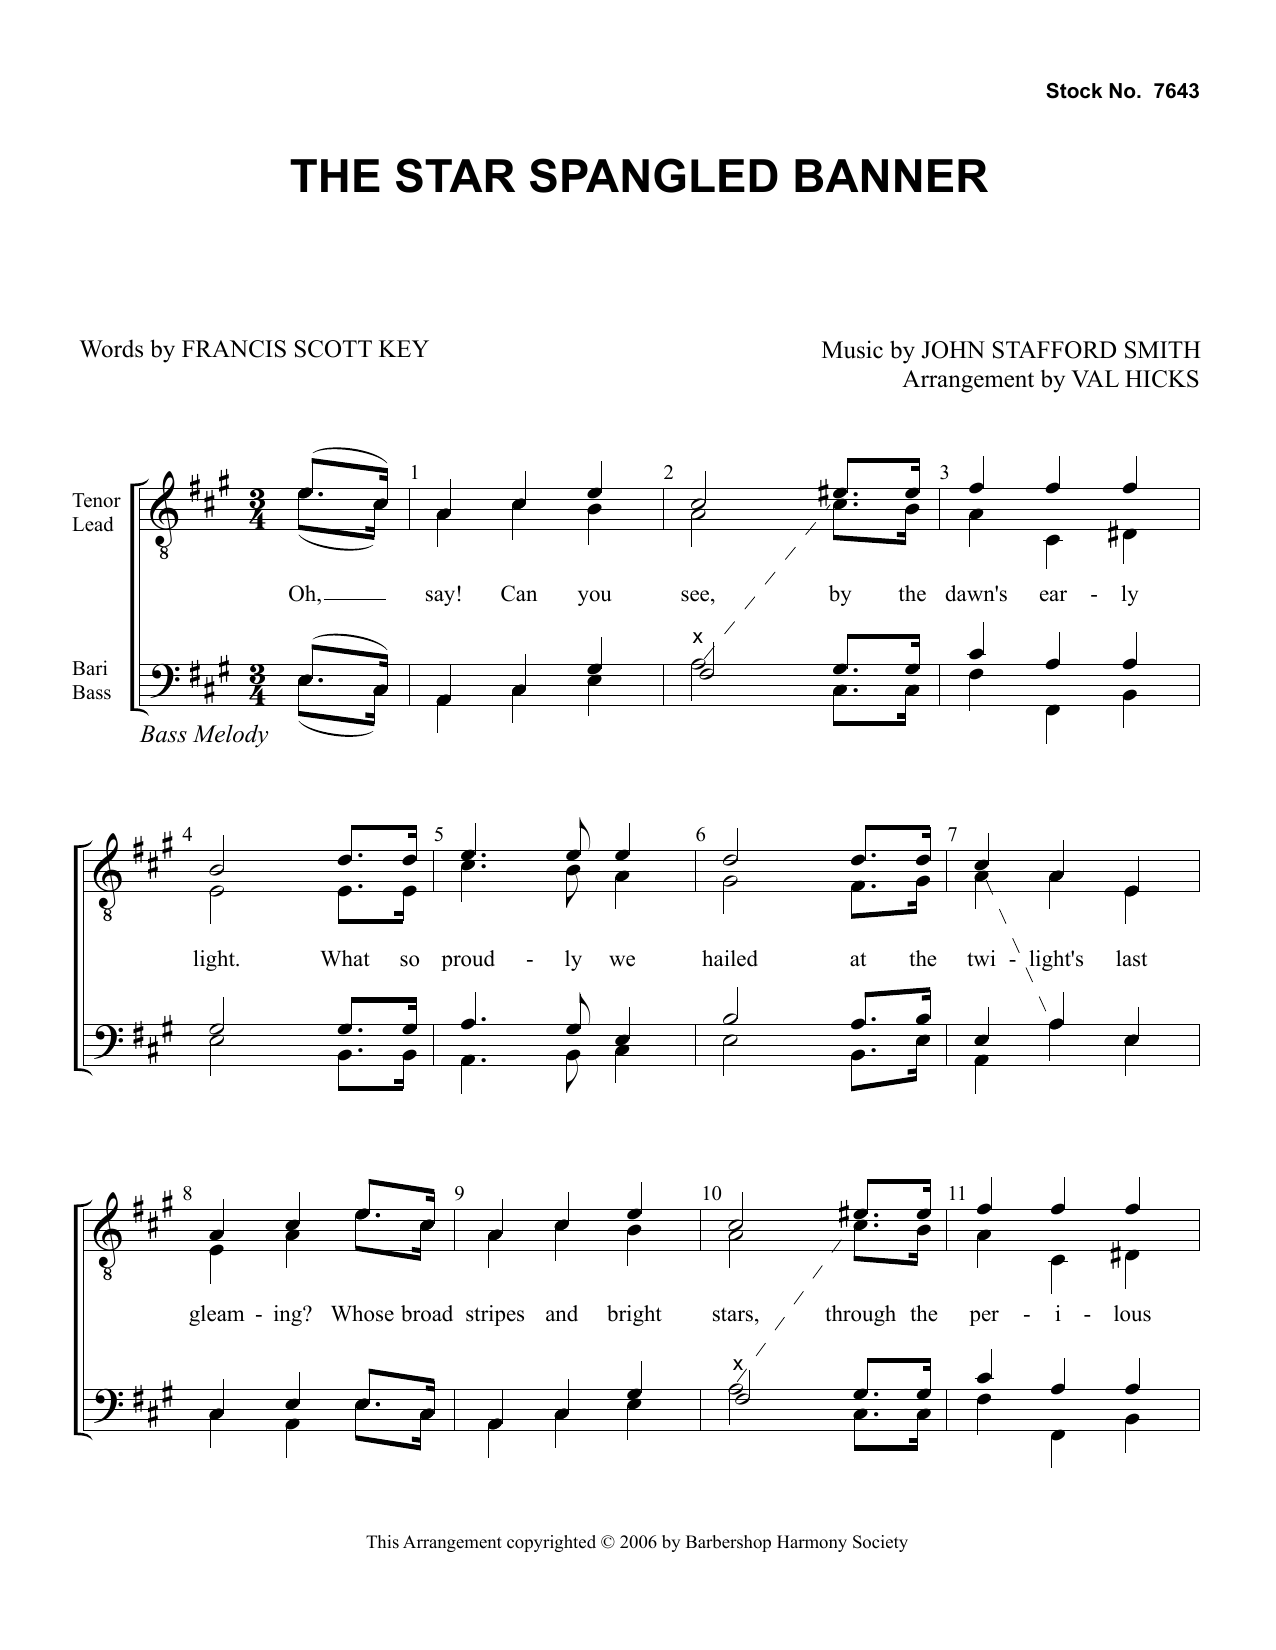 Francis Scott Key Star Spangled Banner (arr. Val Hicks) Sheet Music Notes & Chords for TTBB Choir - Download or Print PDF